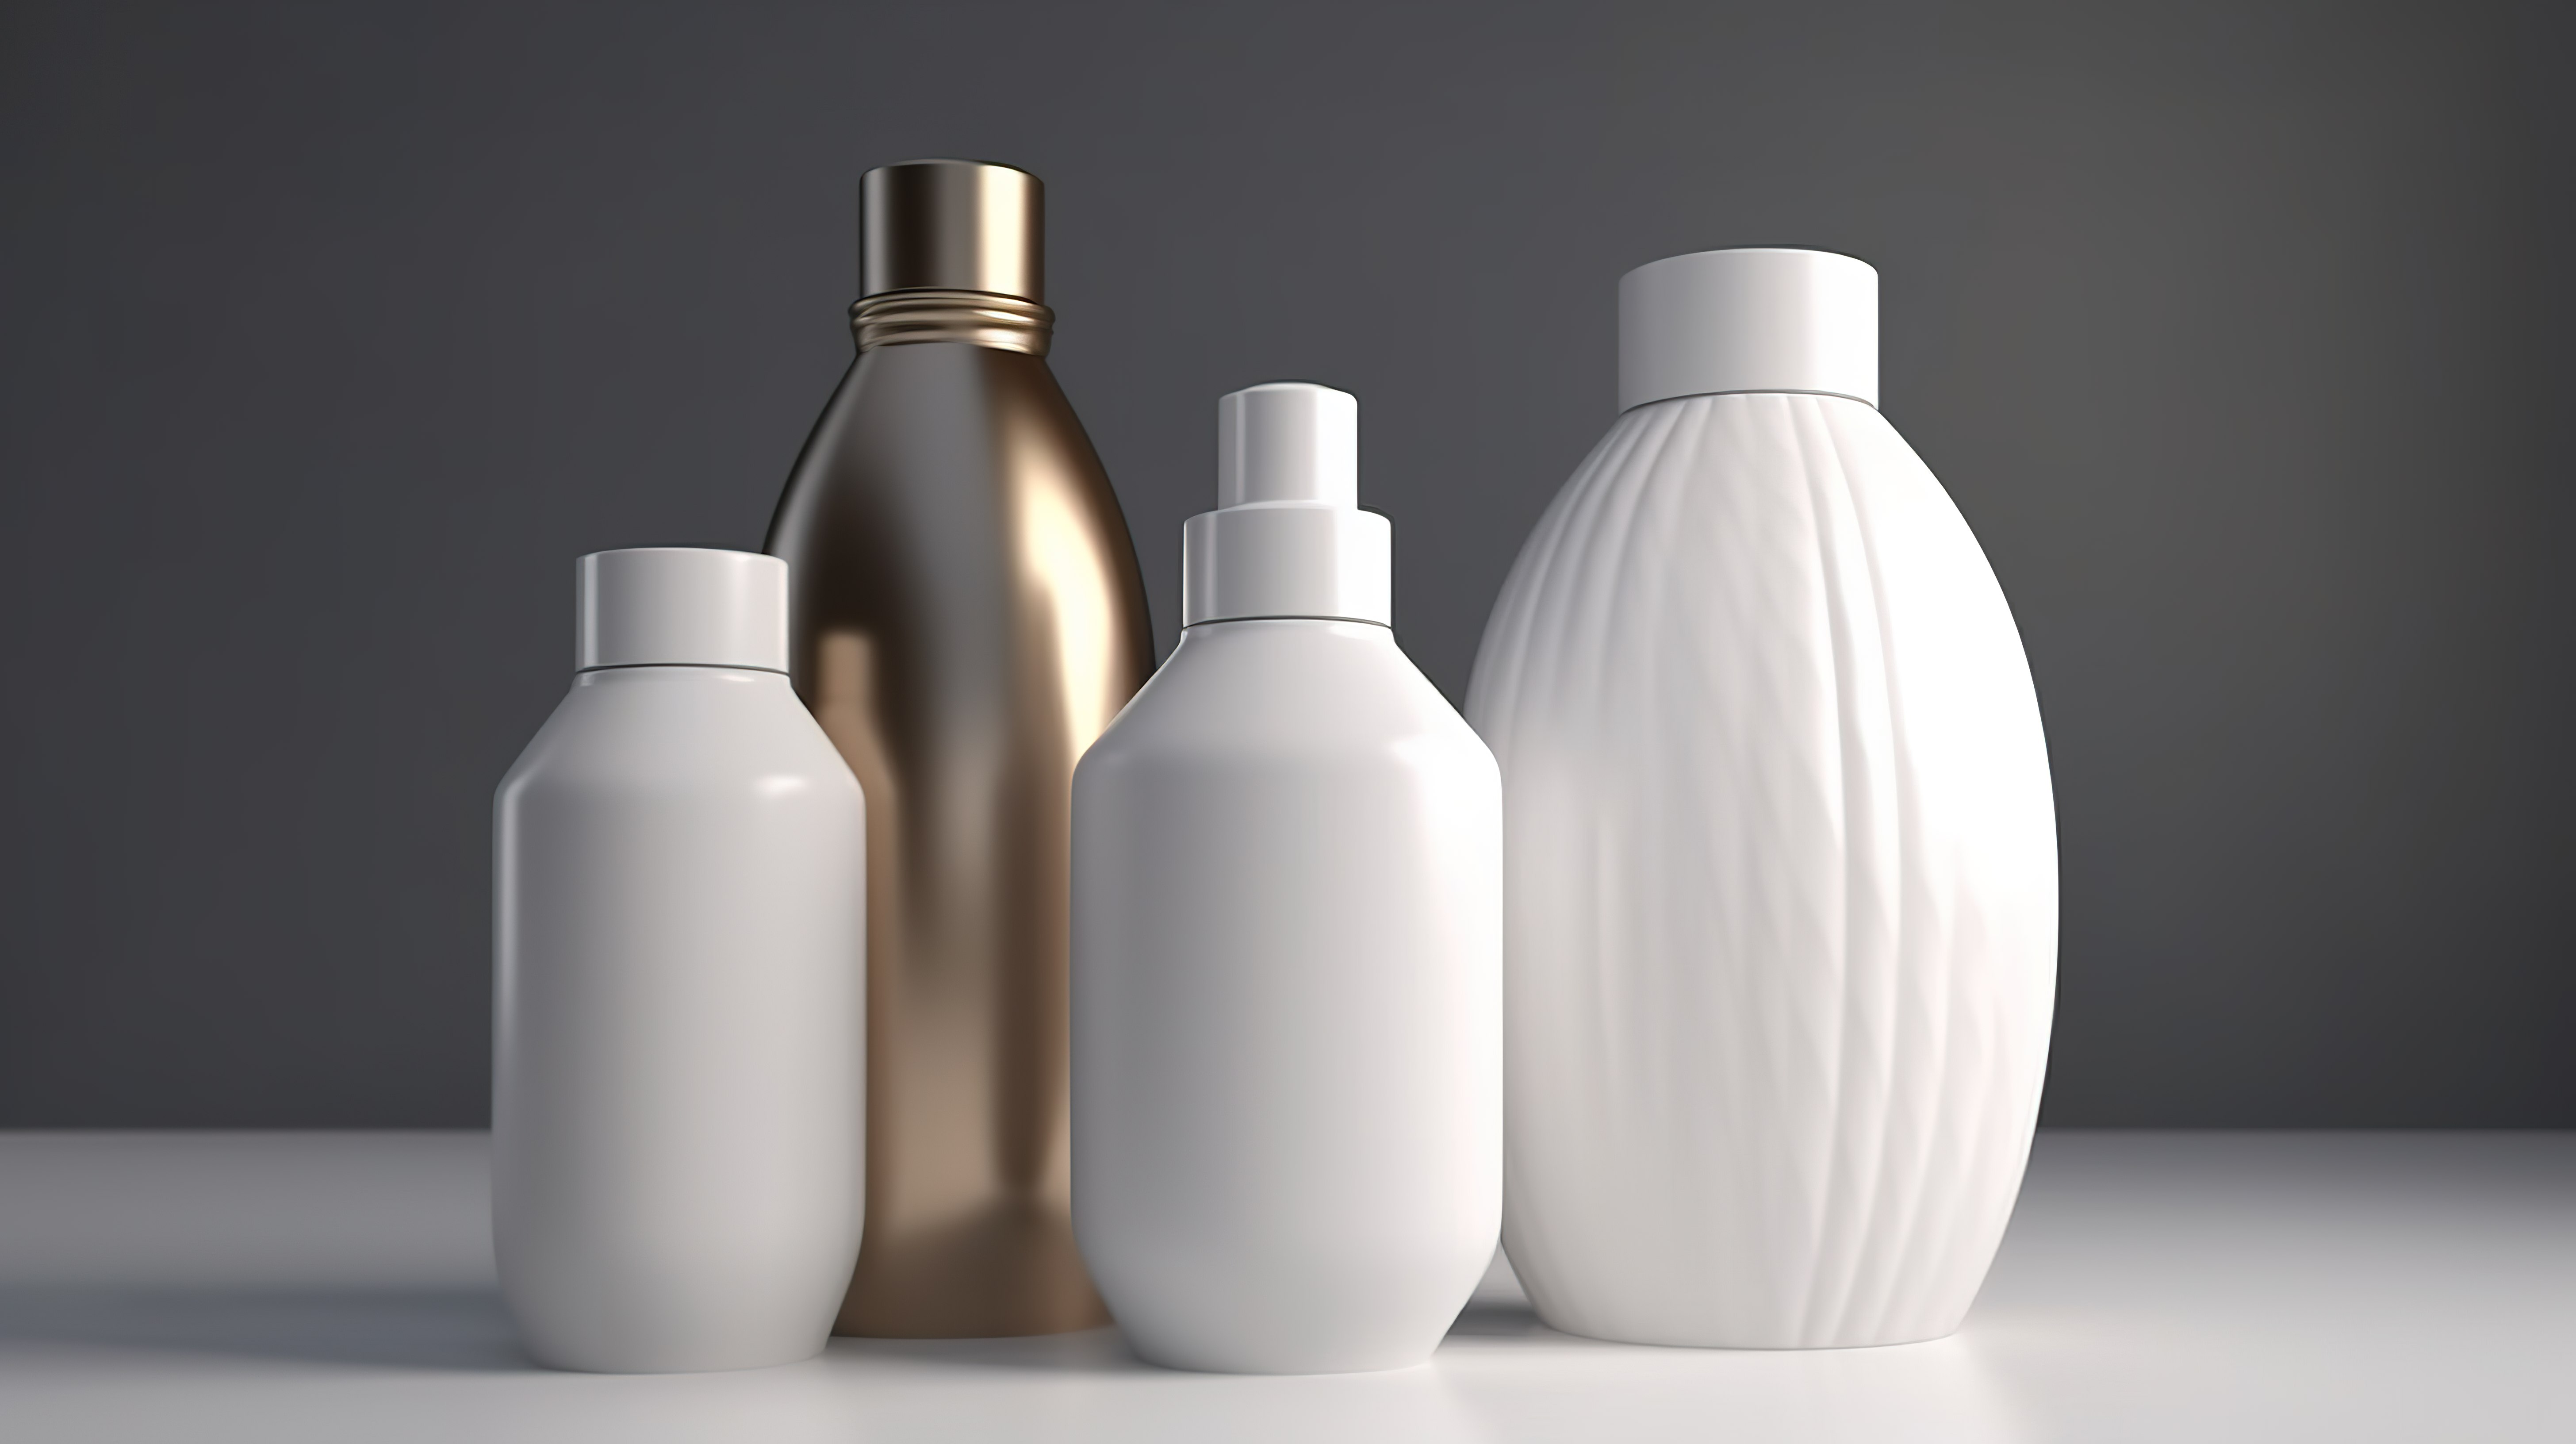 3D 渲染中化妆品瓶模型的美容产品包装套装图片